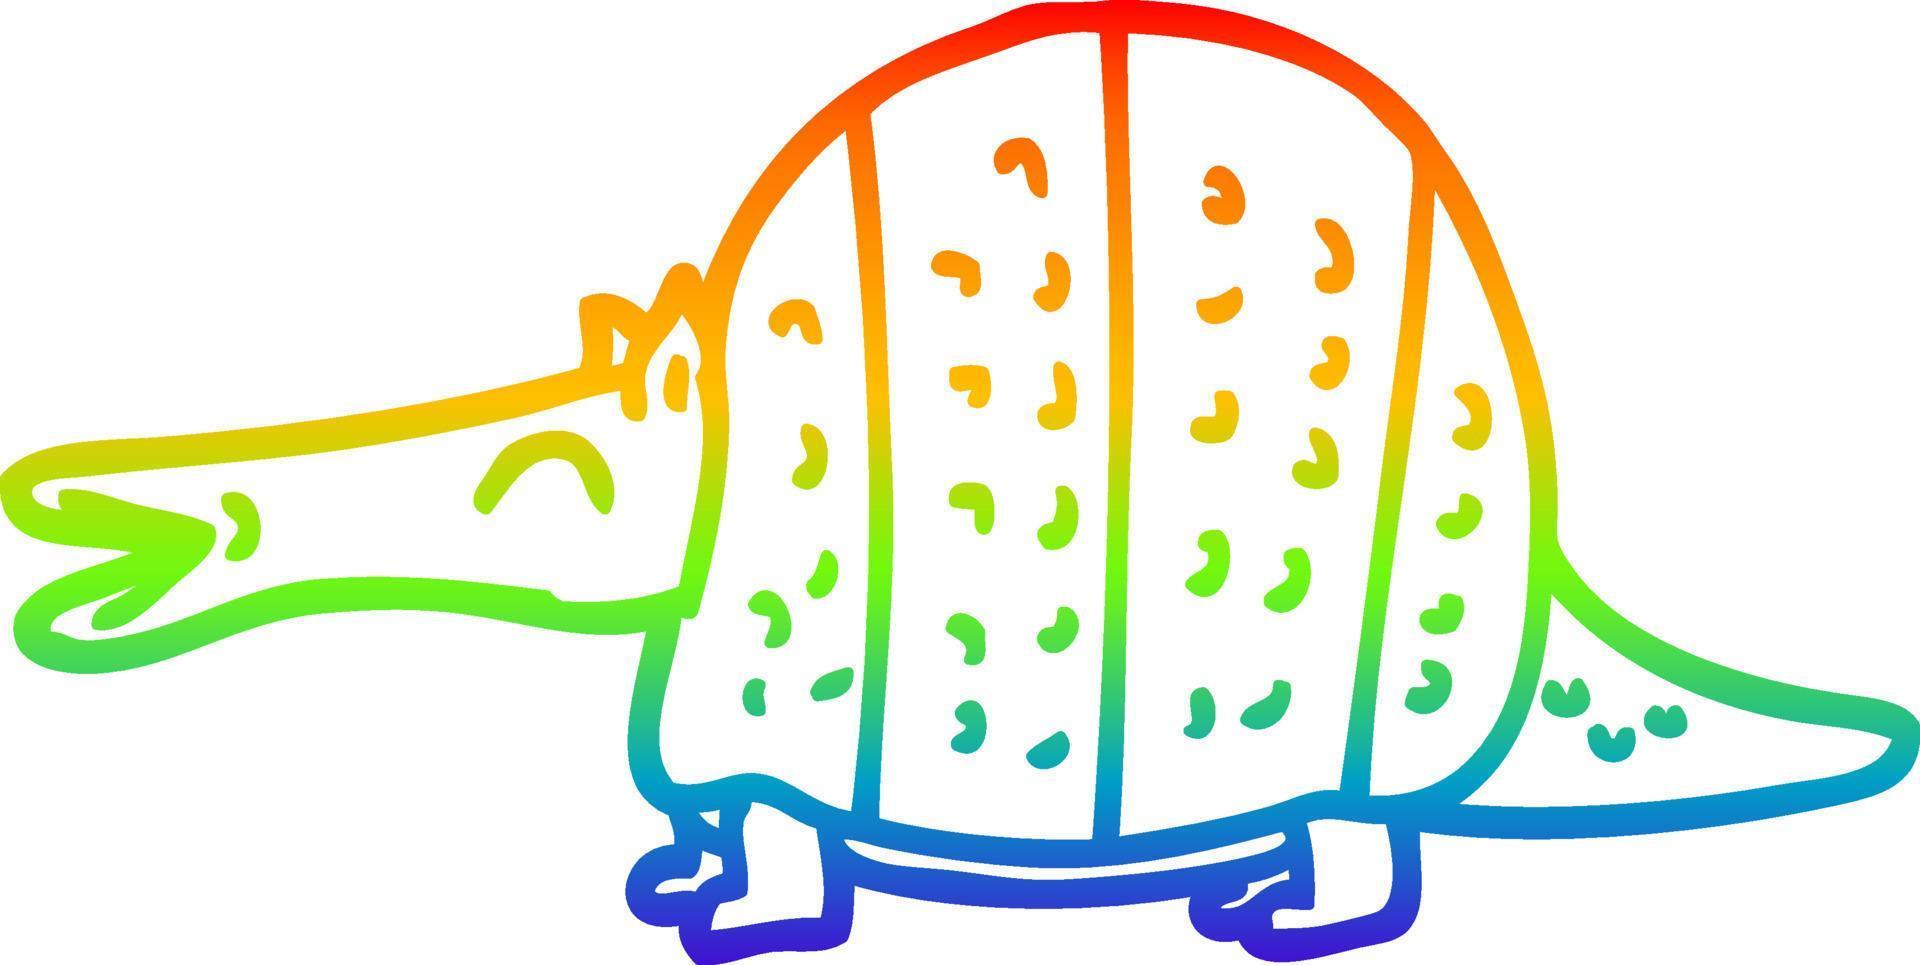 rainbow gradient line drawing cartoon armadillo vector